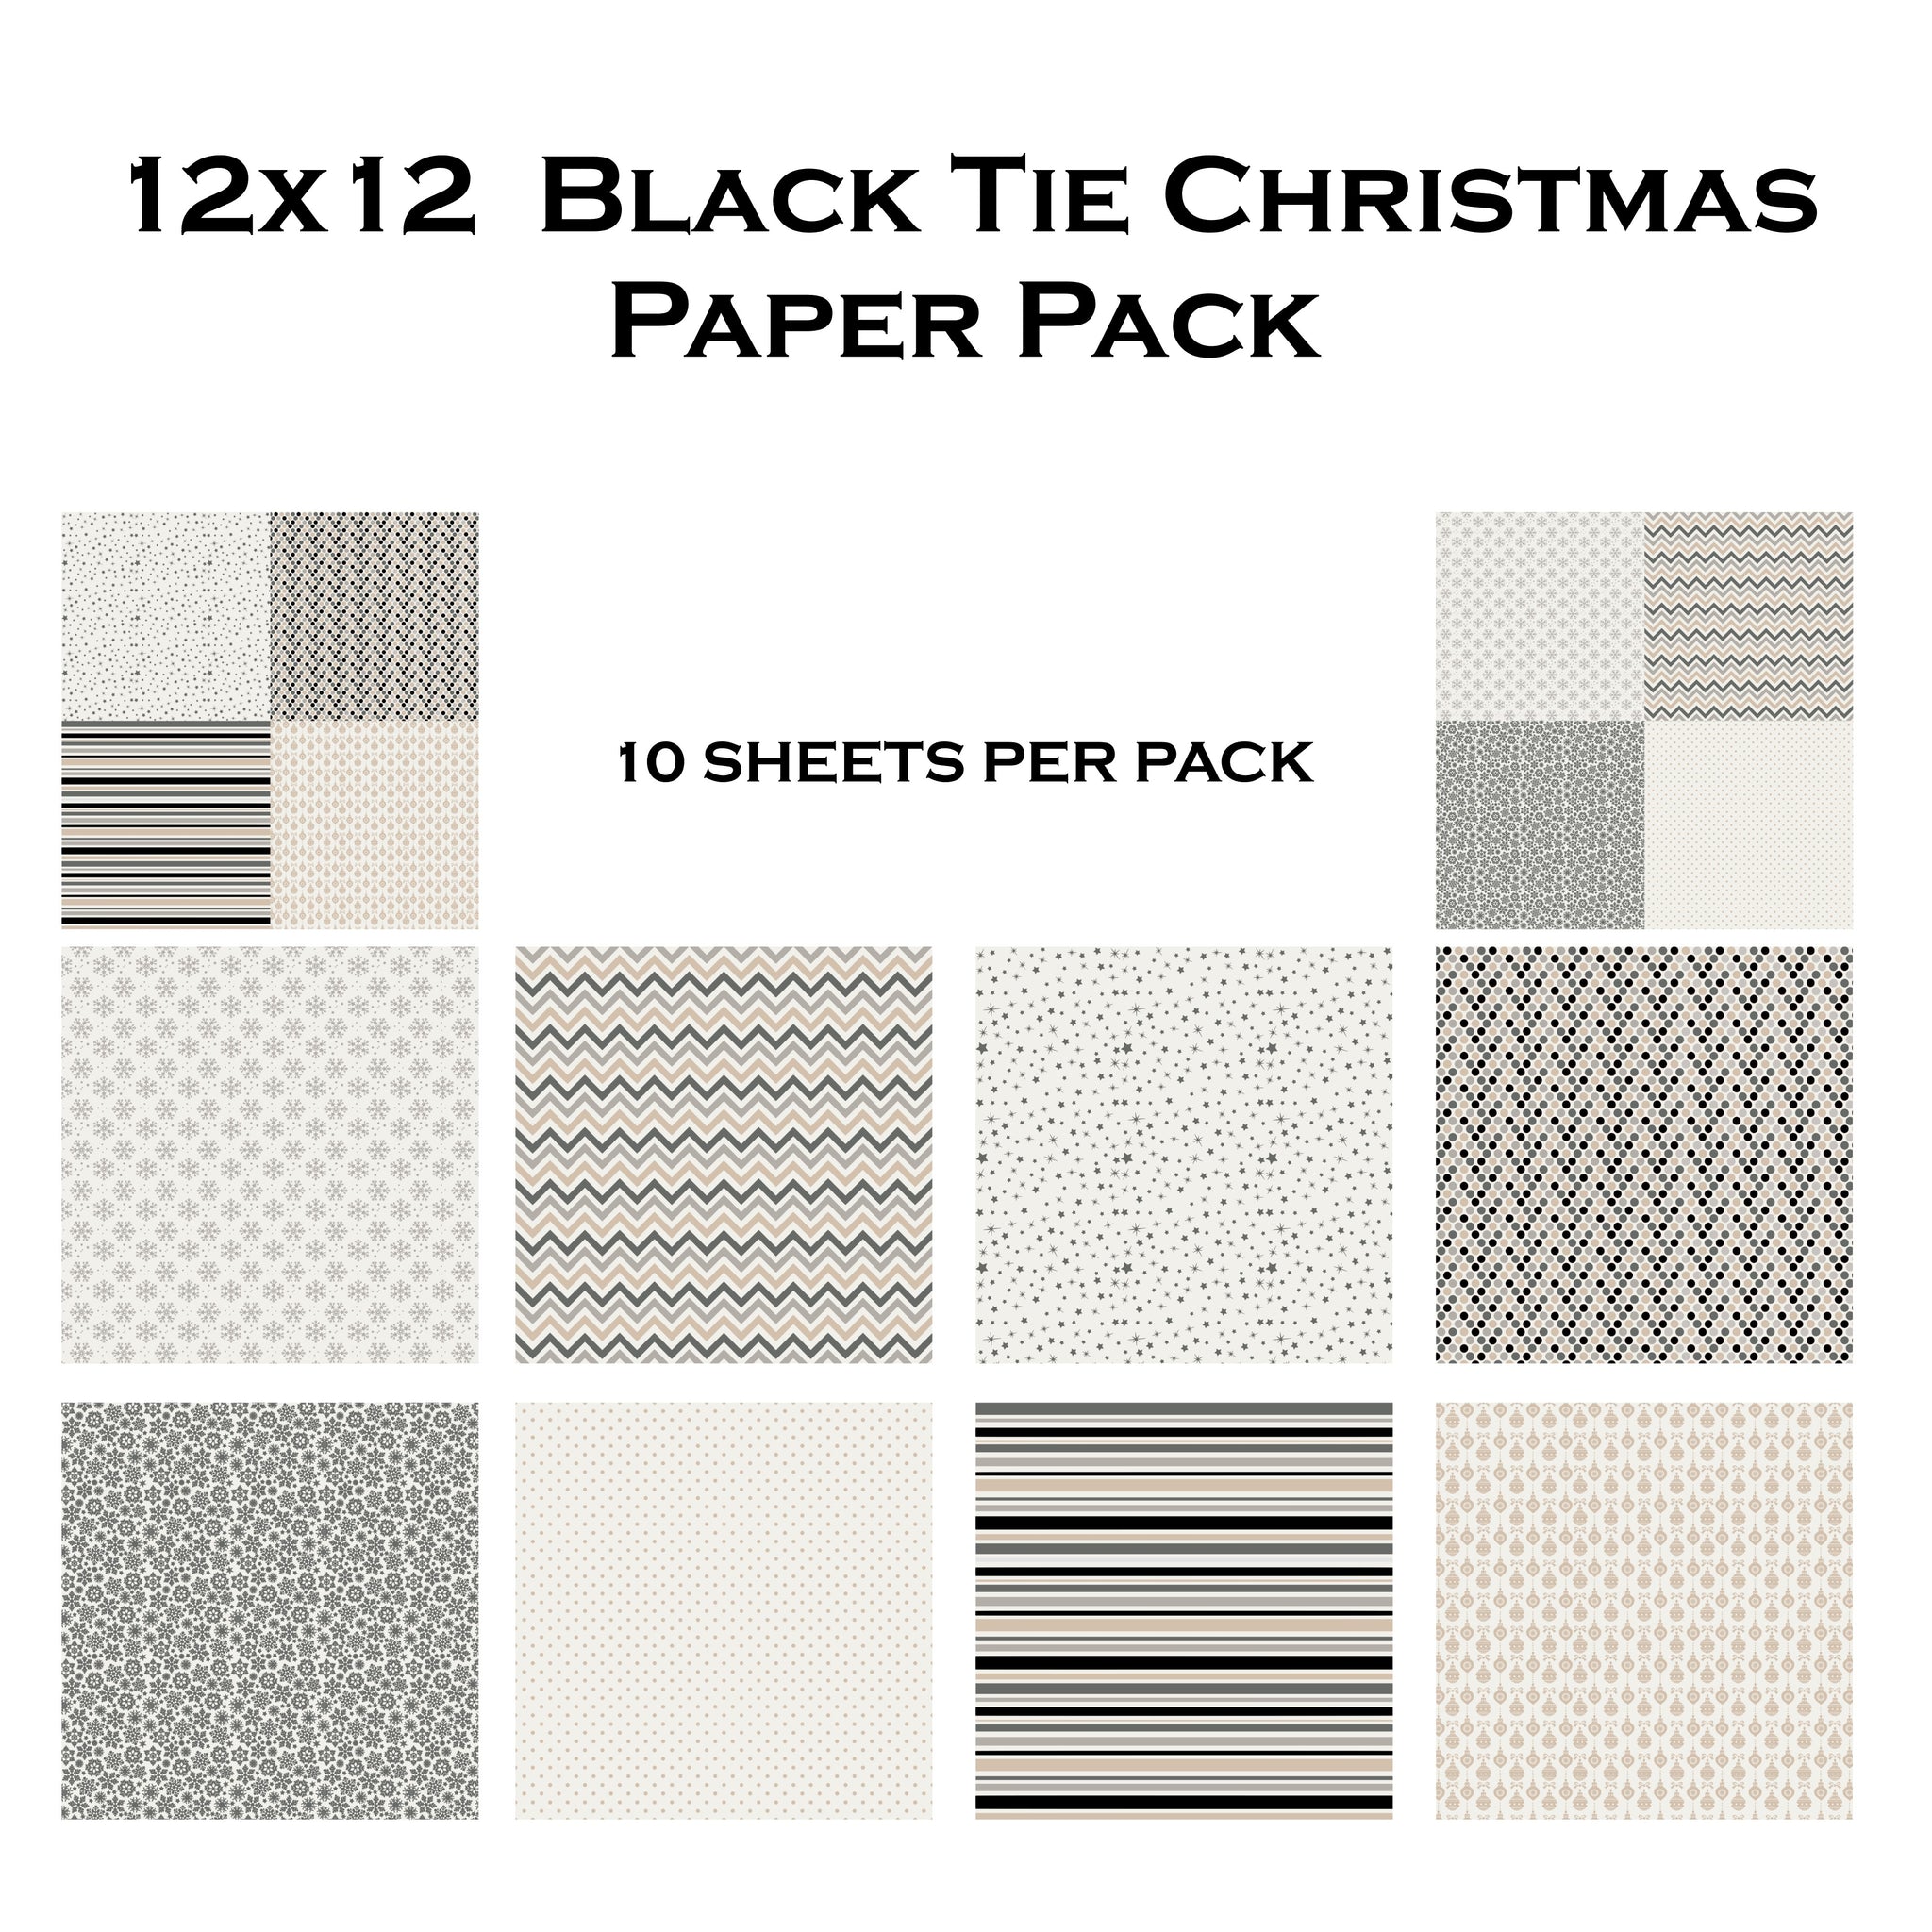 Black Tie Christmas 12x12 Paper Pack